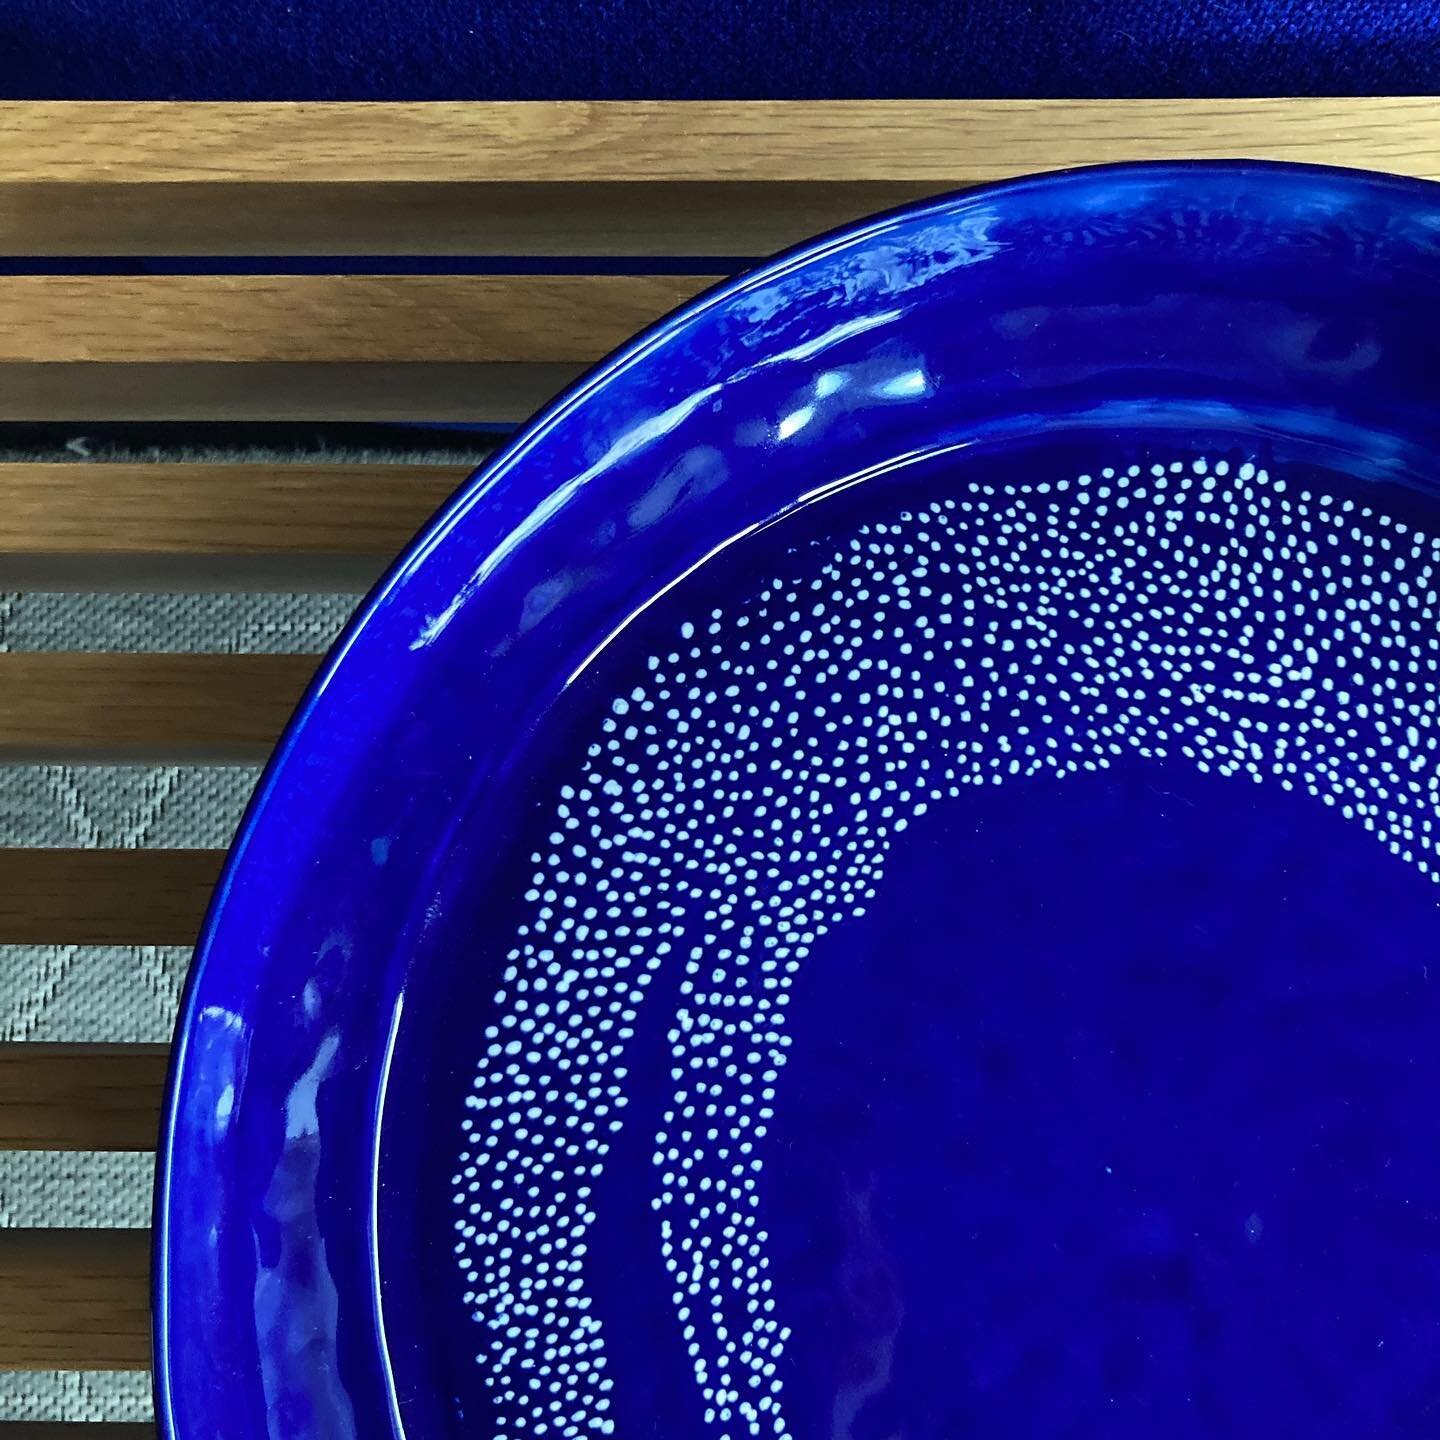 Very happy with my gorgeous birthday gift 💙
.
.
.
#ottolenghiforserax #pattern #dots 
#blue #ceramics #seraxdesign